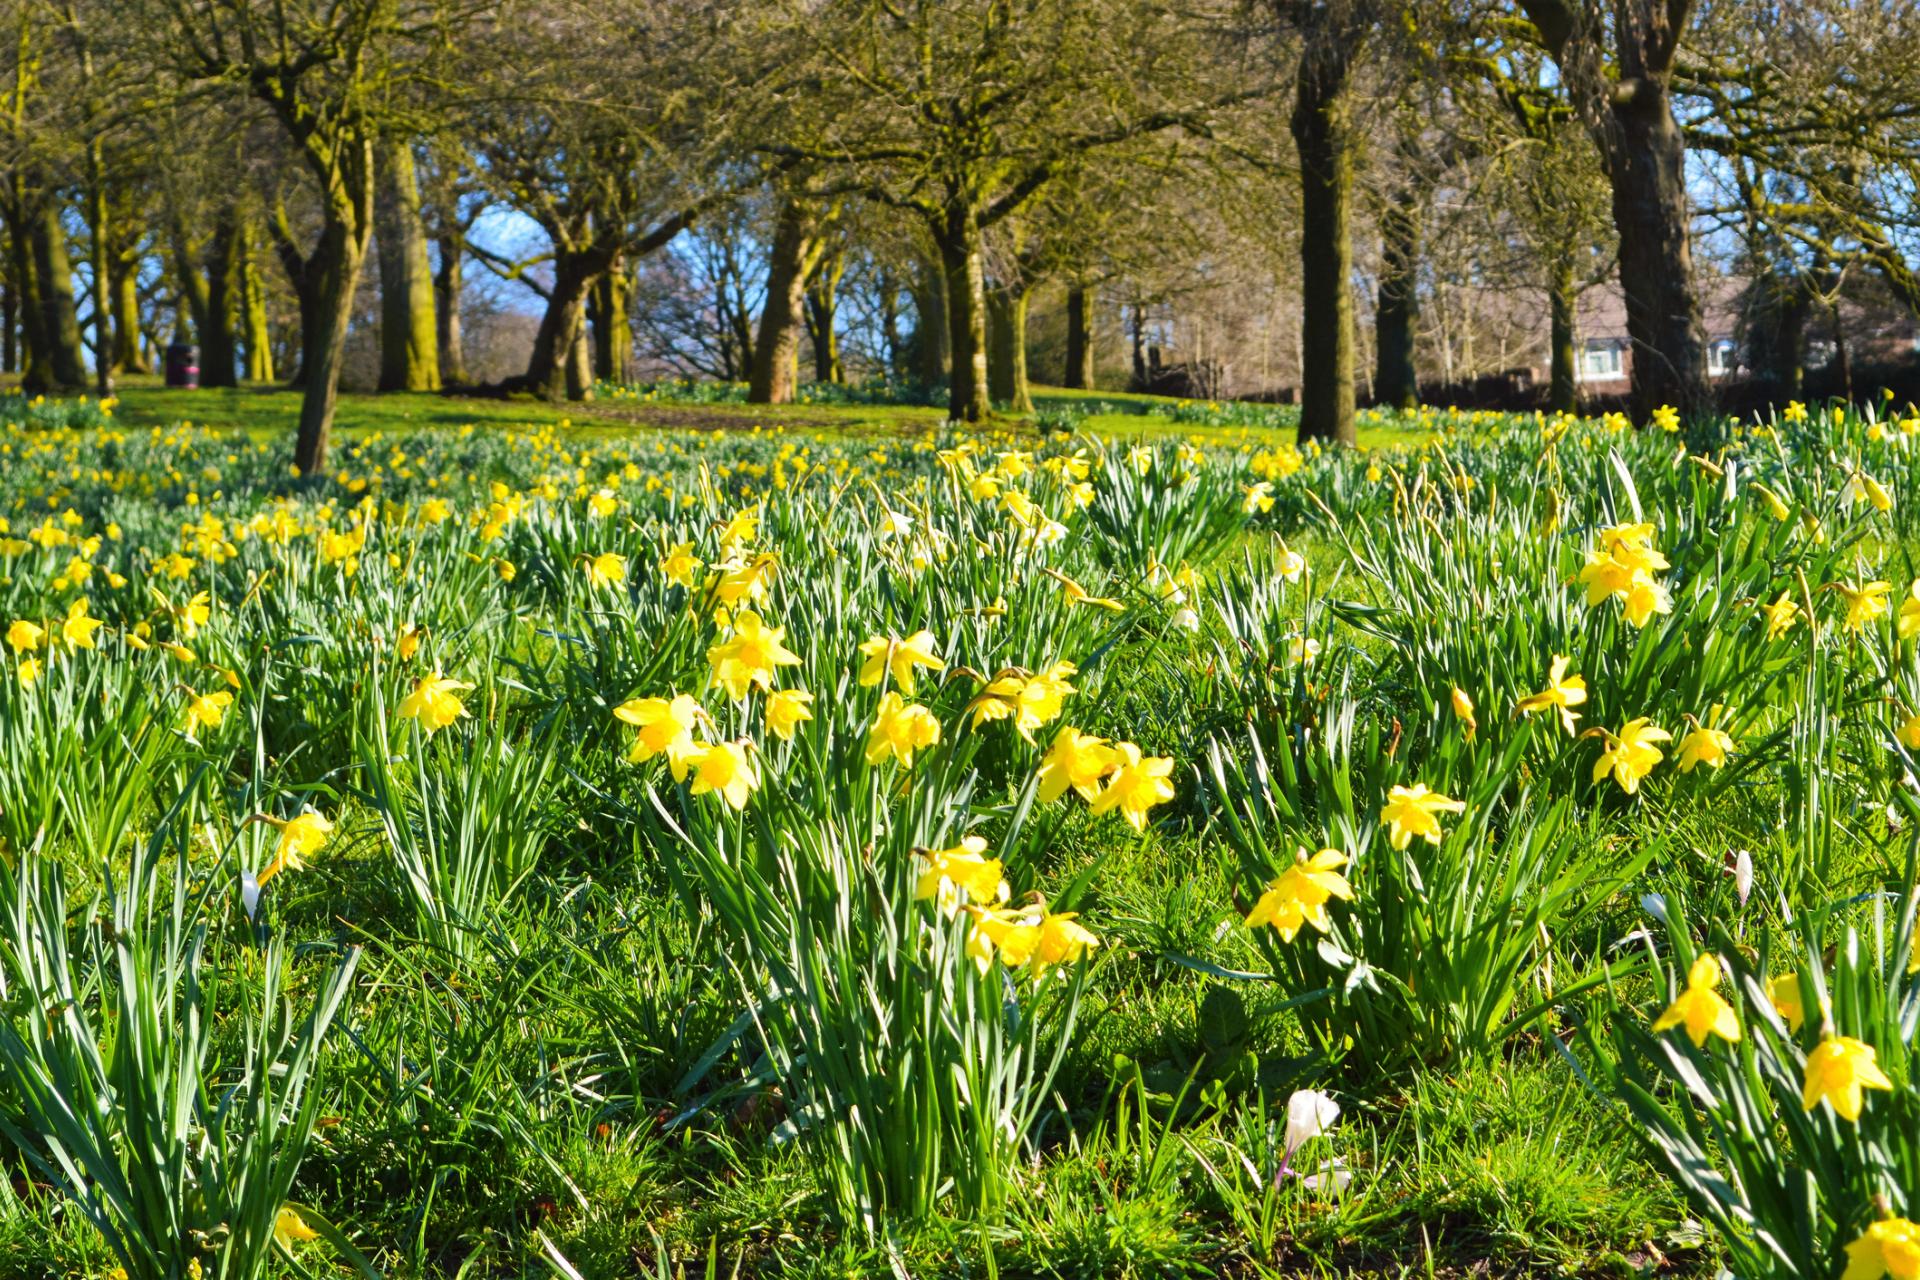 Daffodils in park